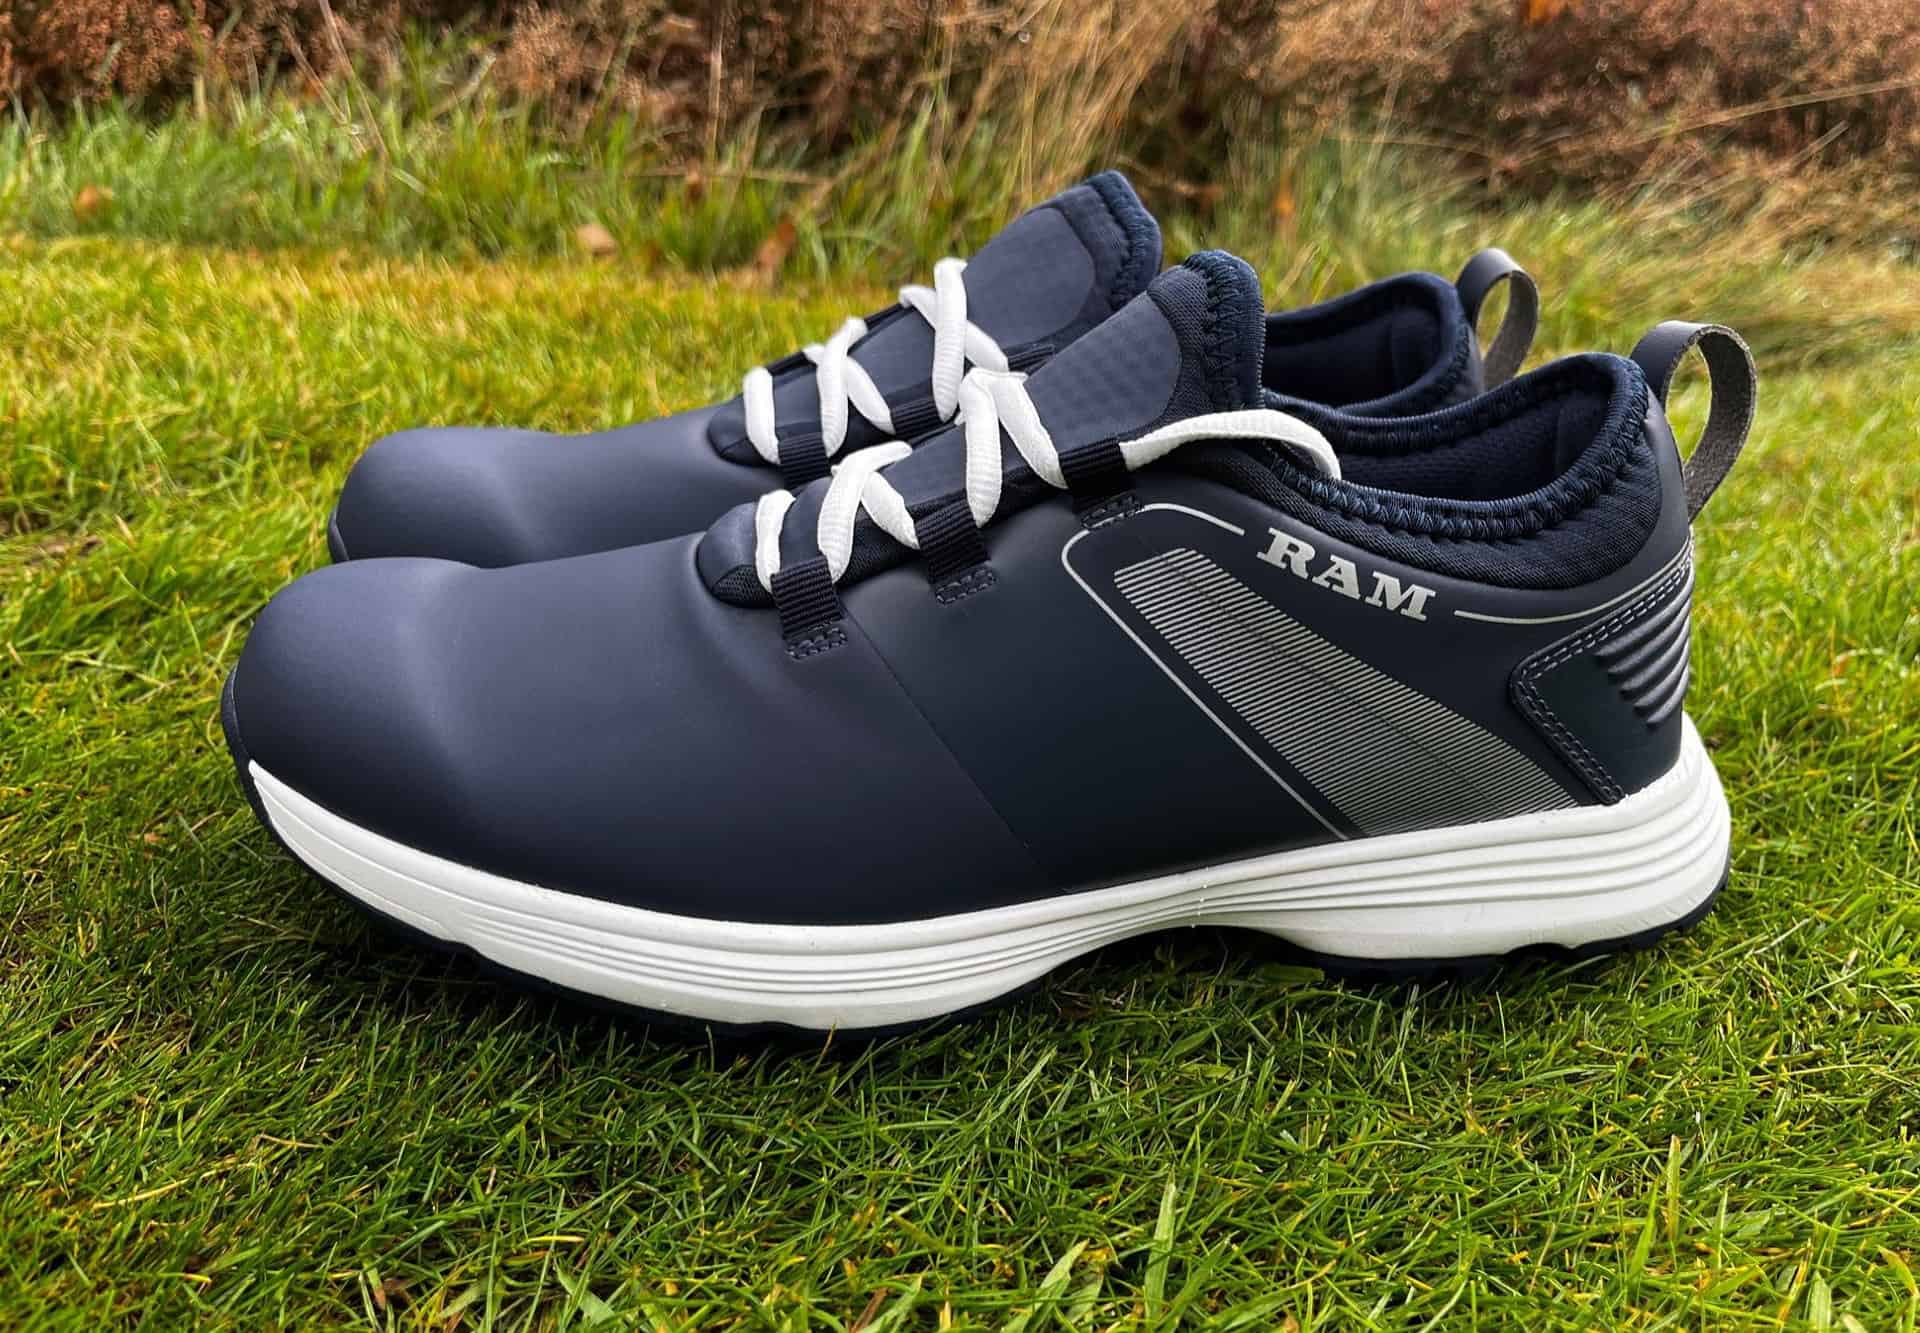 Ram XT1 golf shoes review